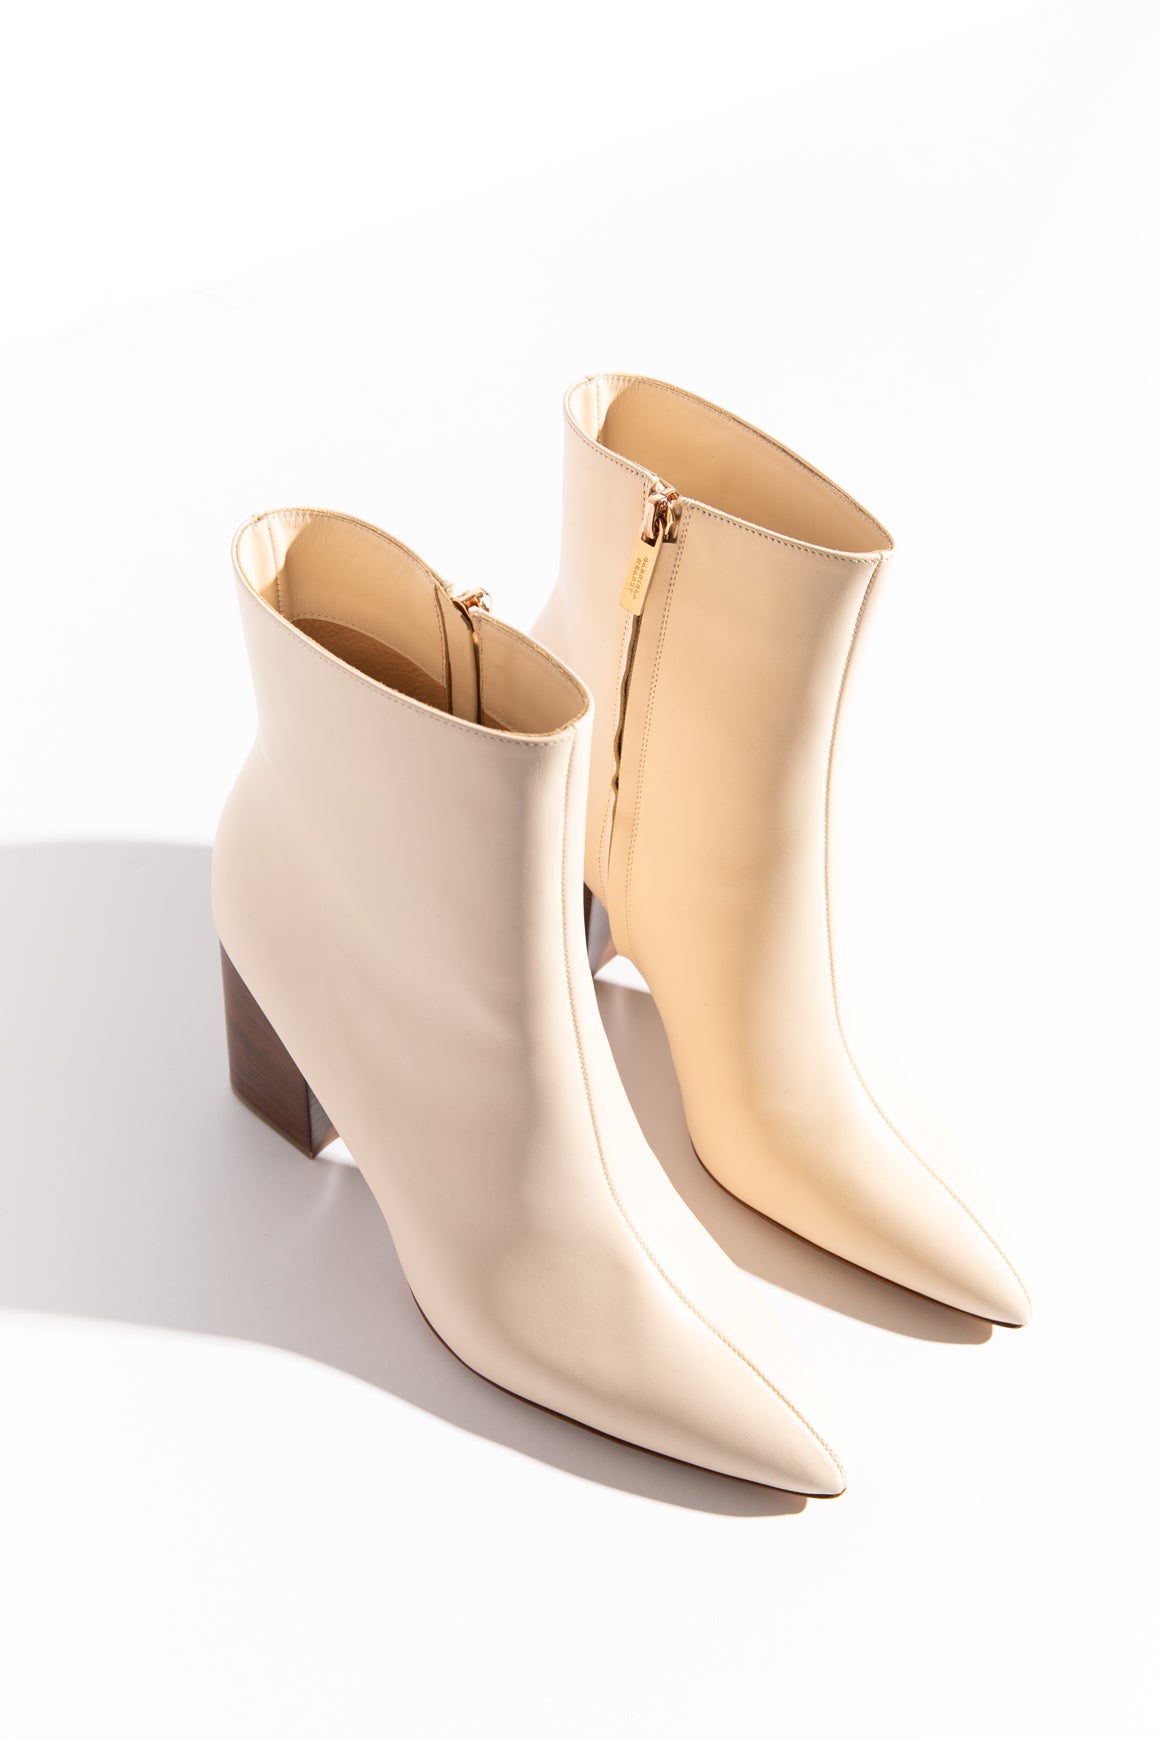 GABRIELA HEARST Cream Ankle Boots (Sz. 41)